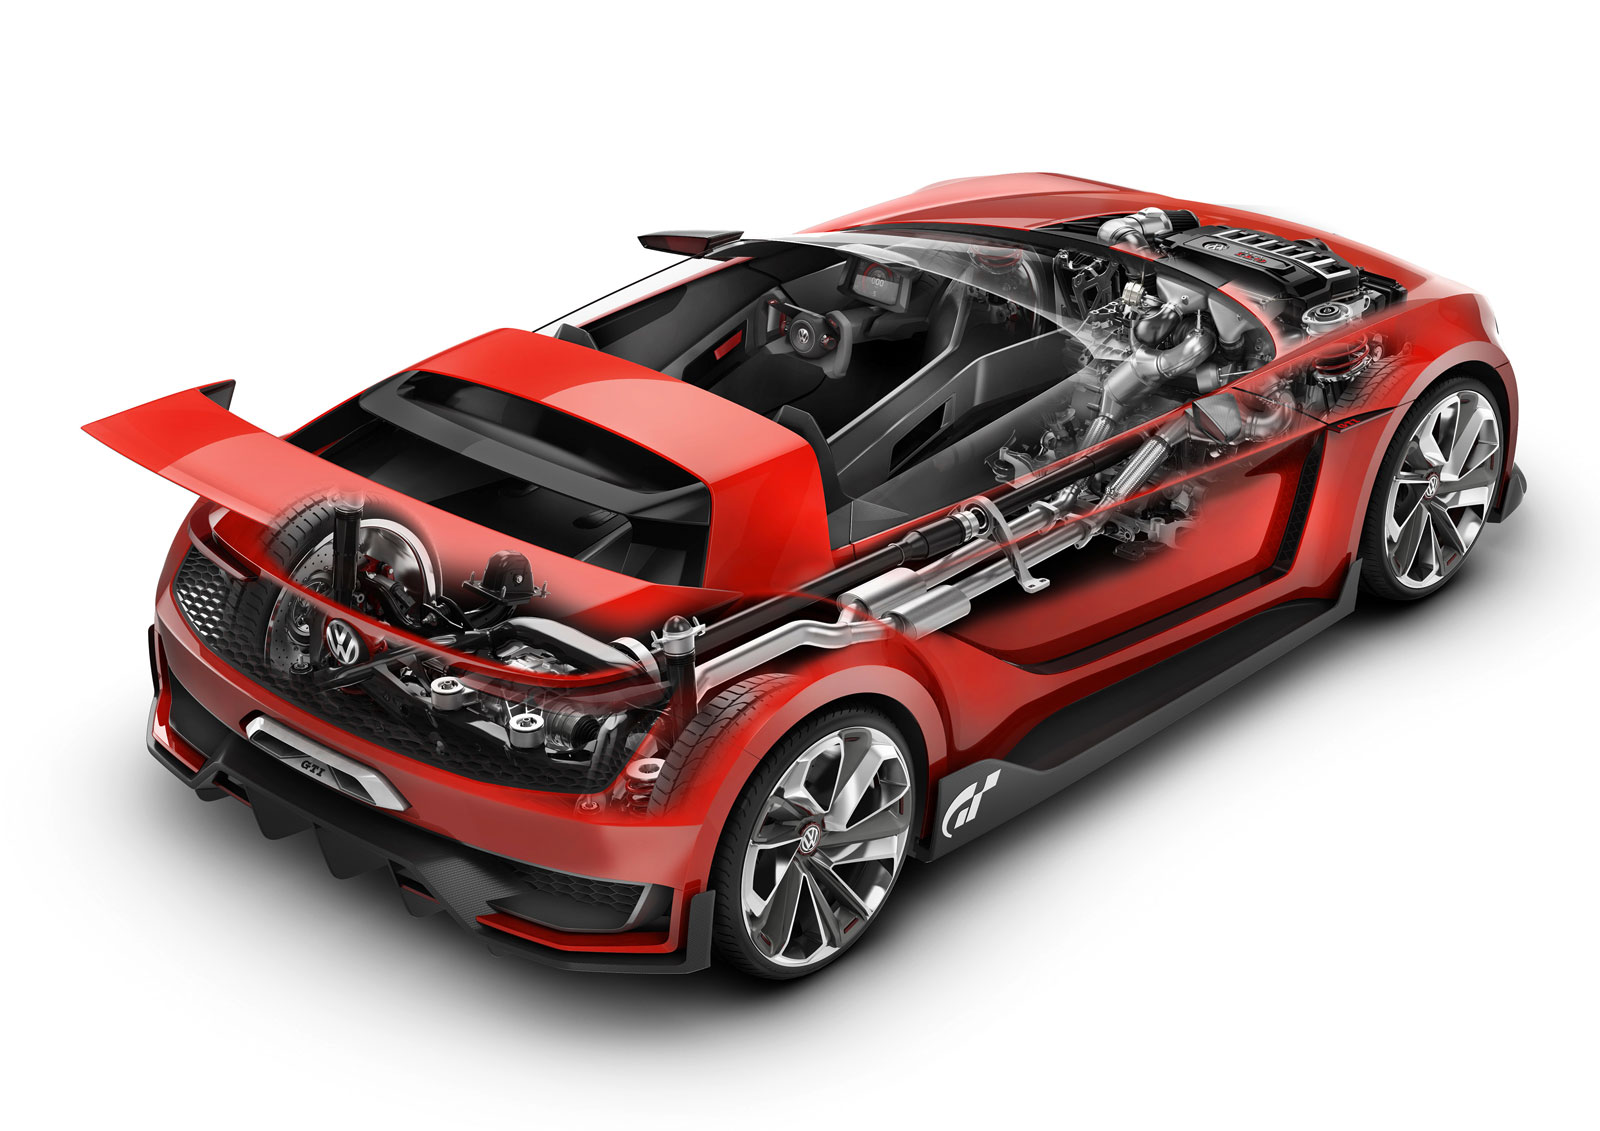 Volkswagen GTI Roadster Vision Gran Turismo (2014)